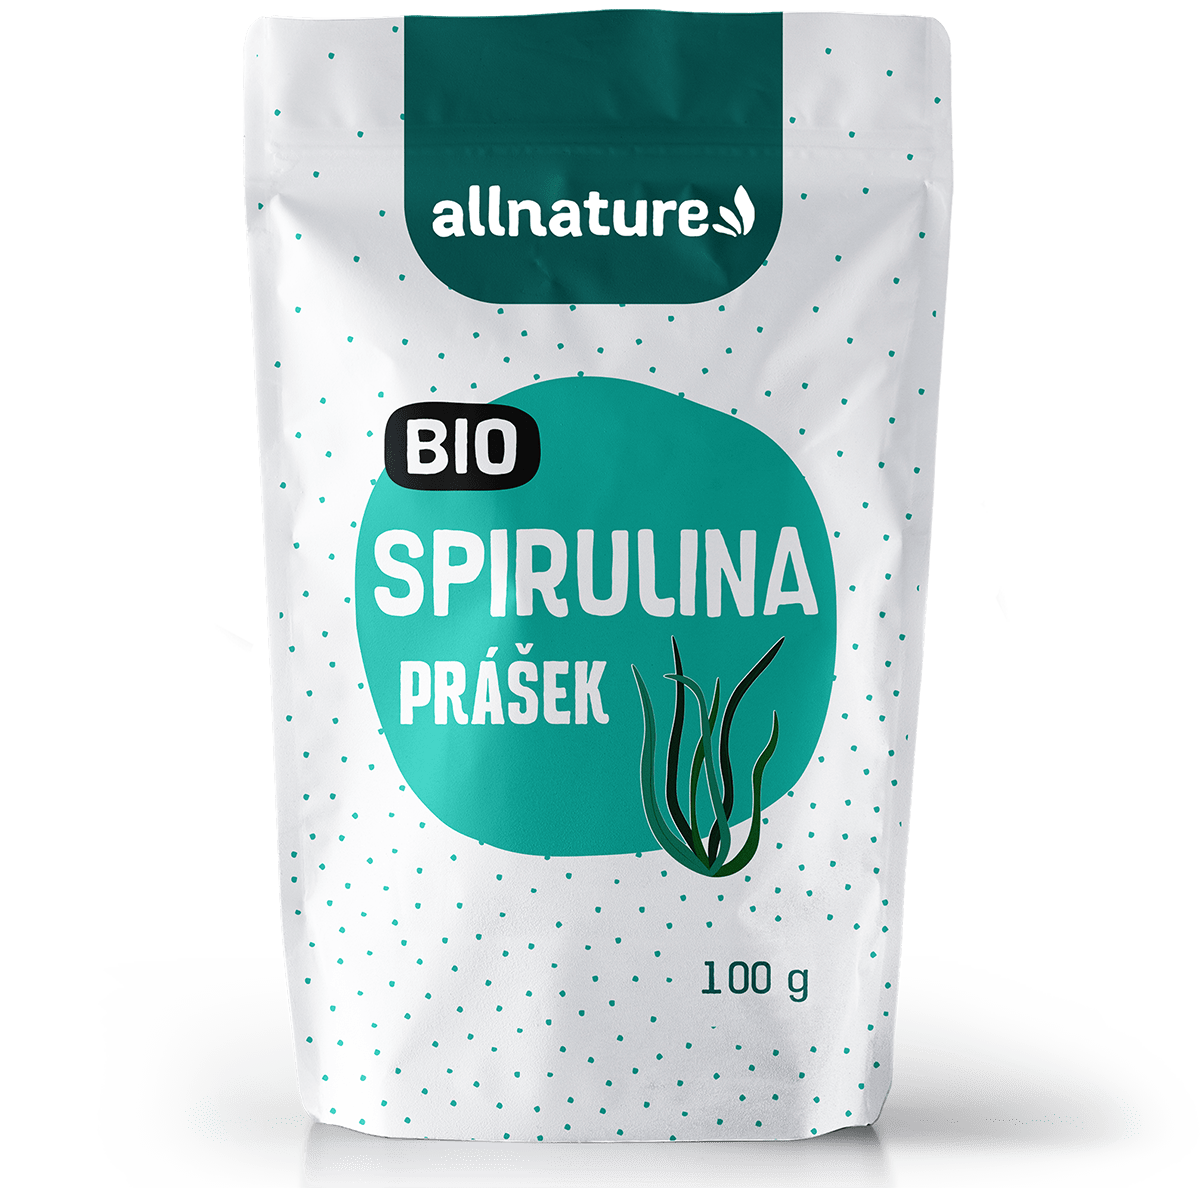 Allnature Spirulina prášek BIO (100 g) - II. jakost - superpotravina plná bílkovin Allnature